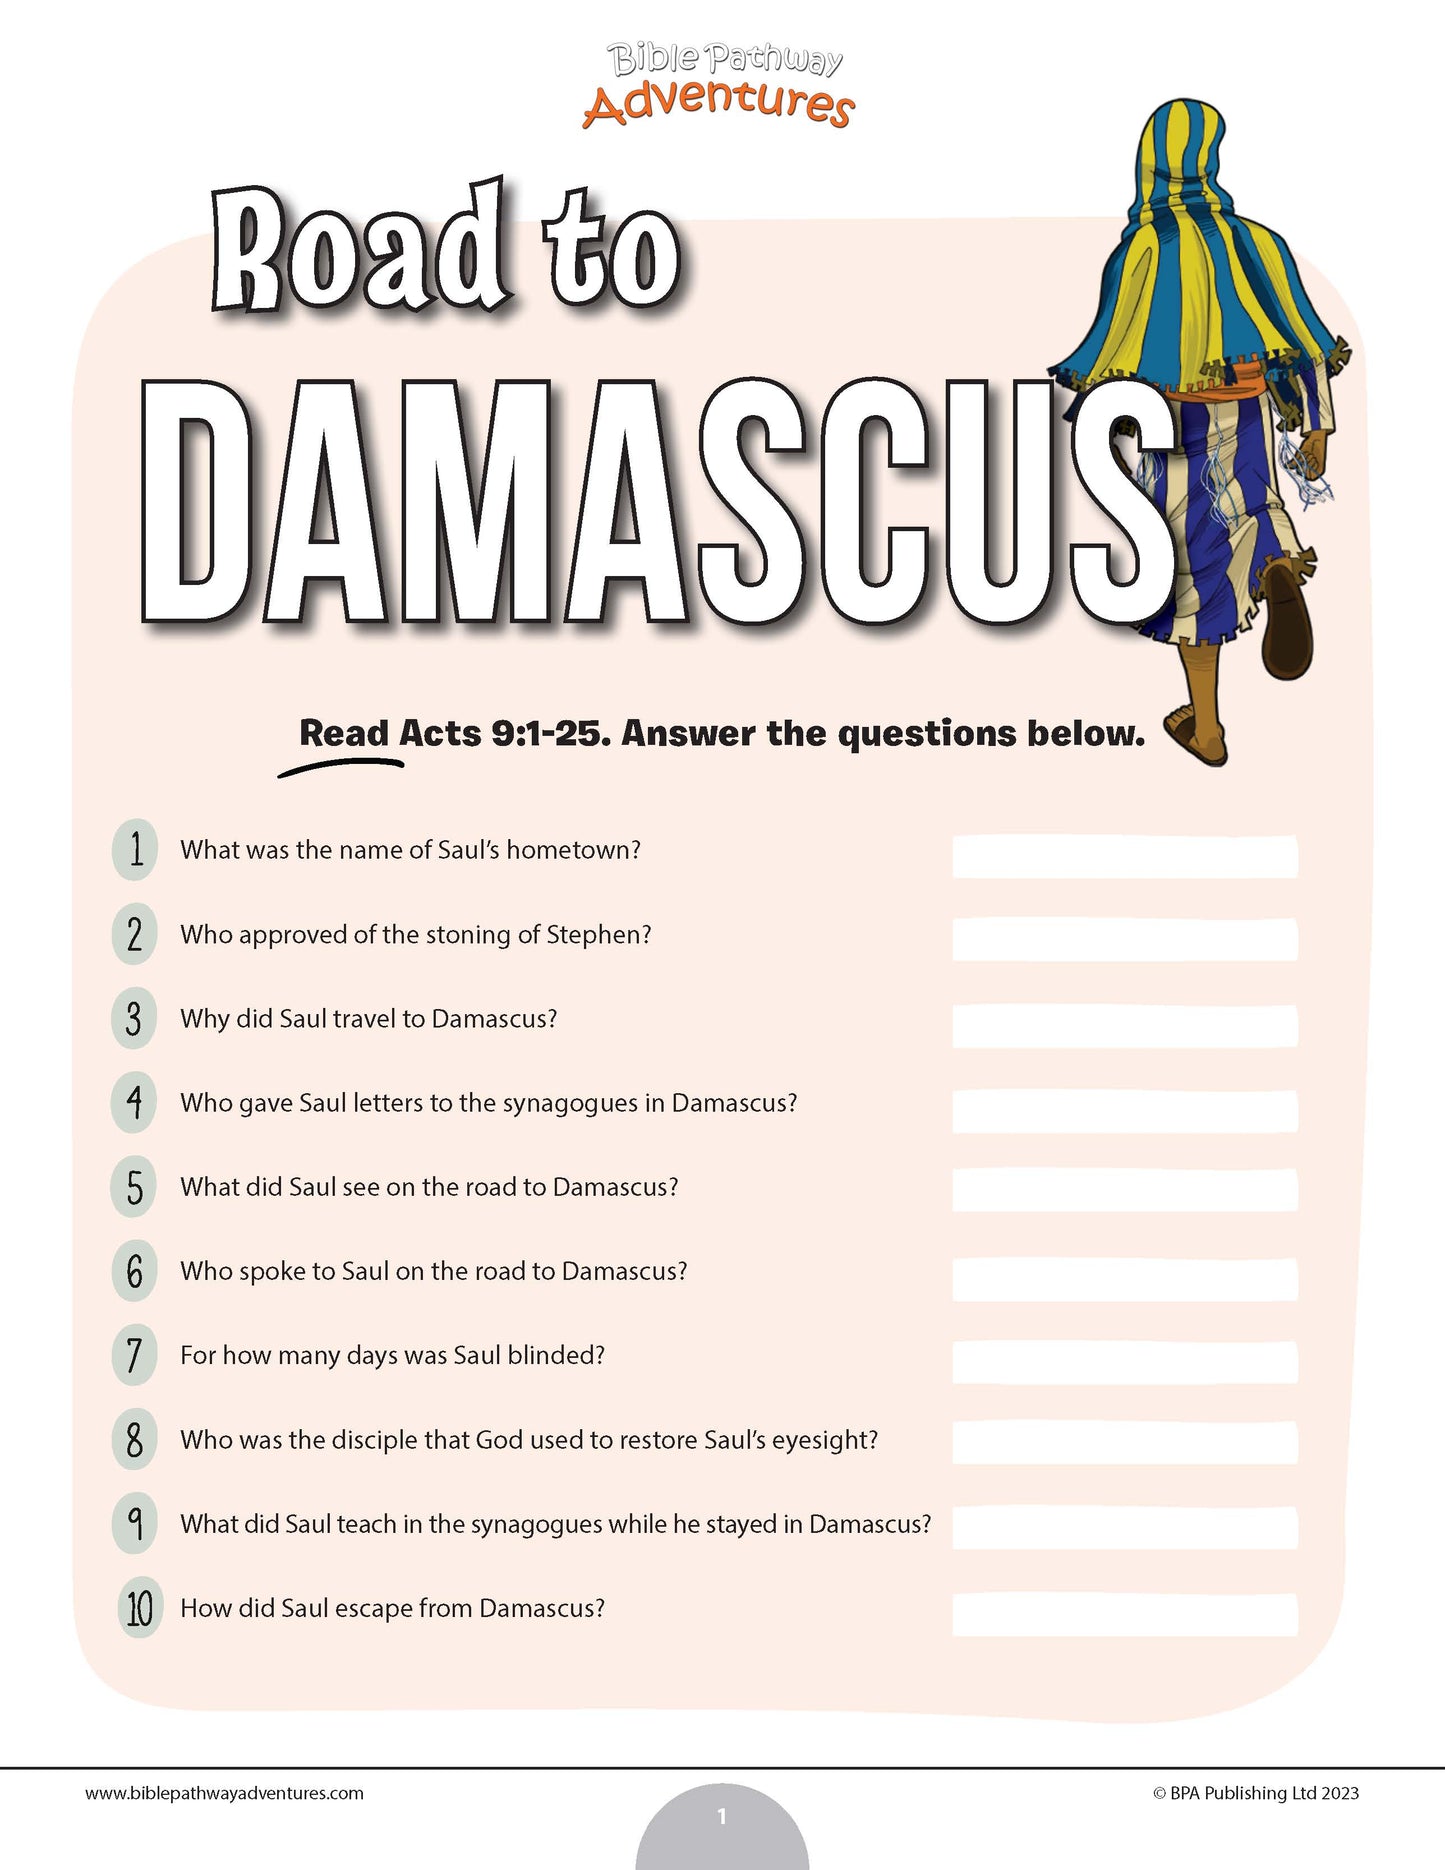 Cuestionario Camino a Damasco